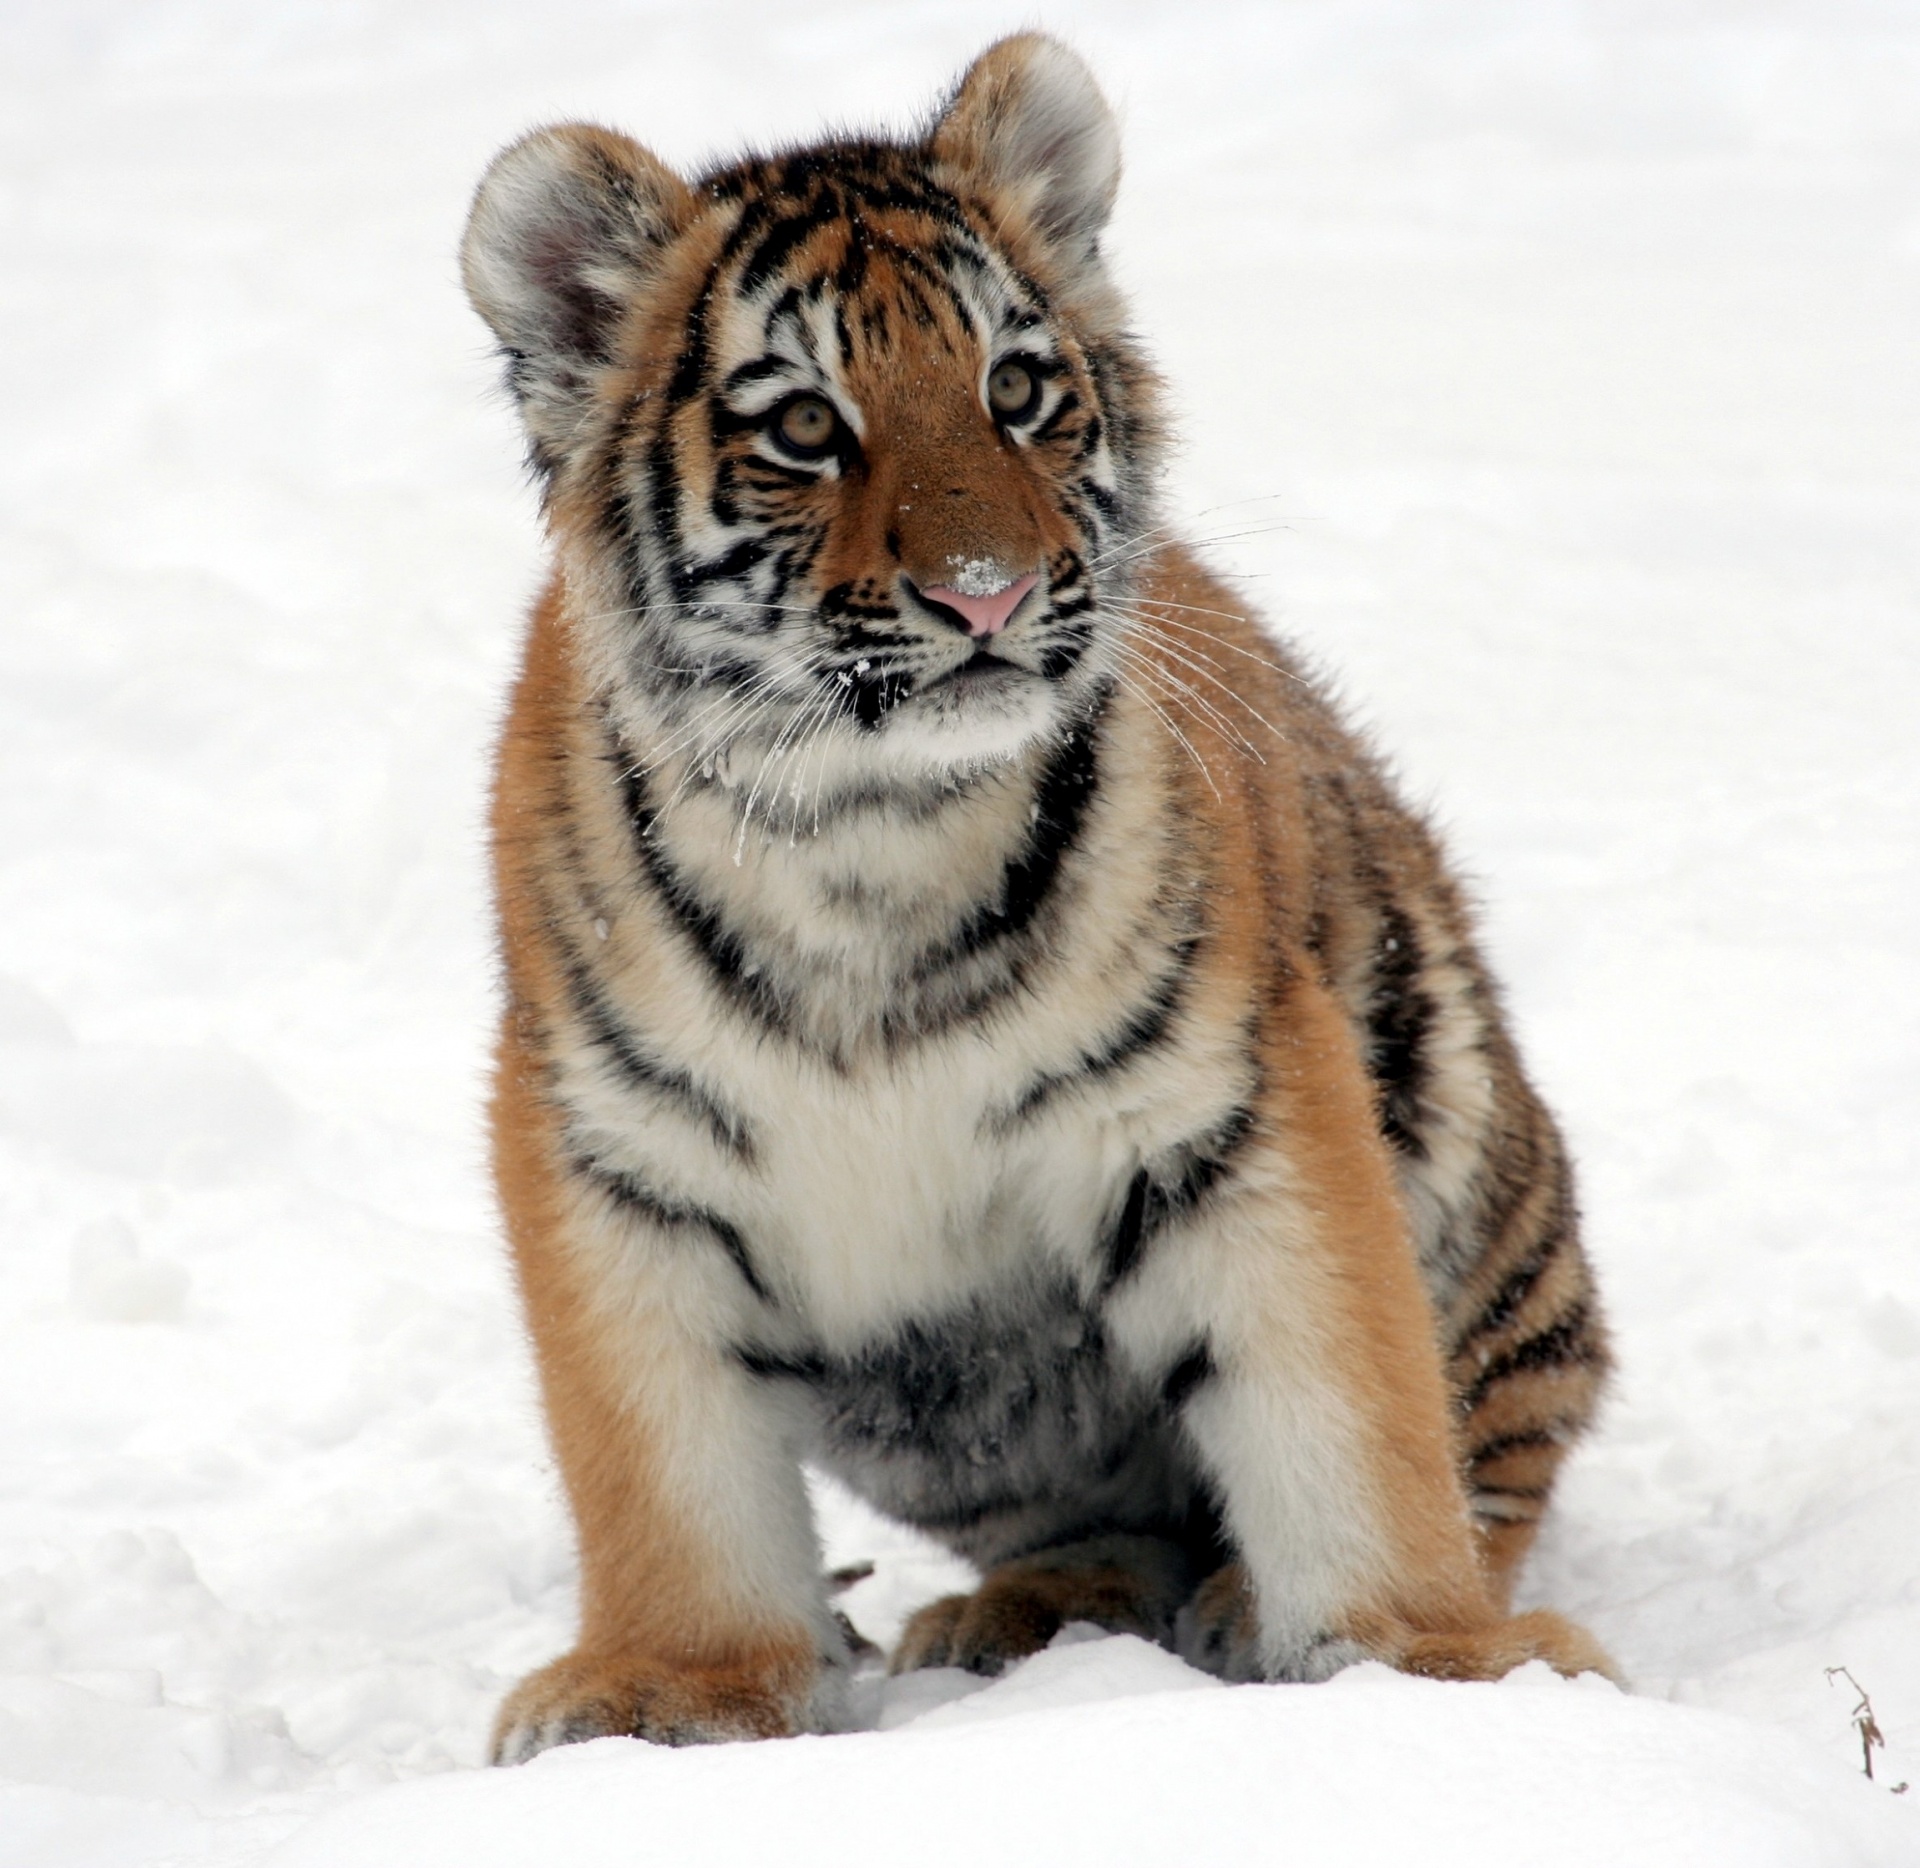 Tiger Cub In The Snow